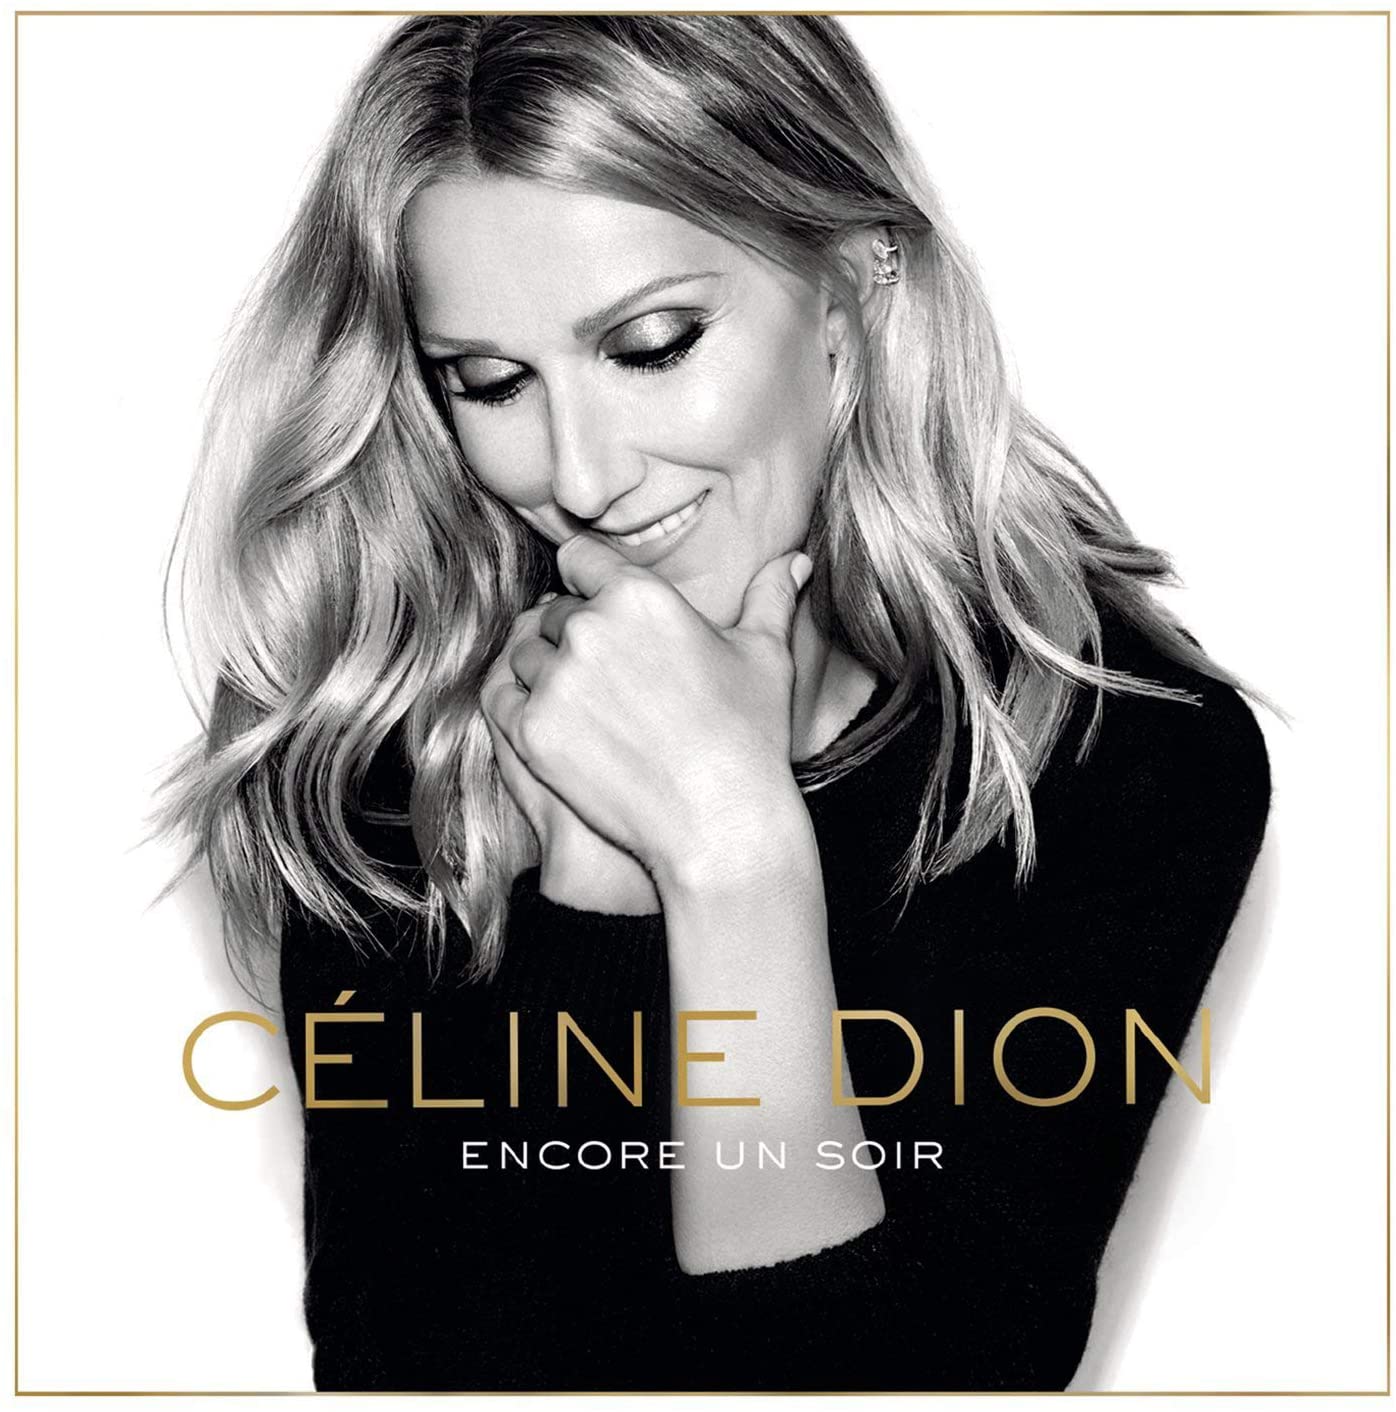 Поп Sony Celine Dion - Encore un soir первый мини альбом хан сын юна lovender